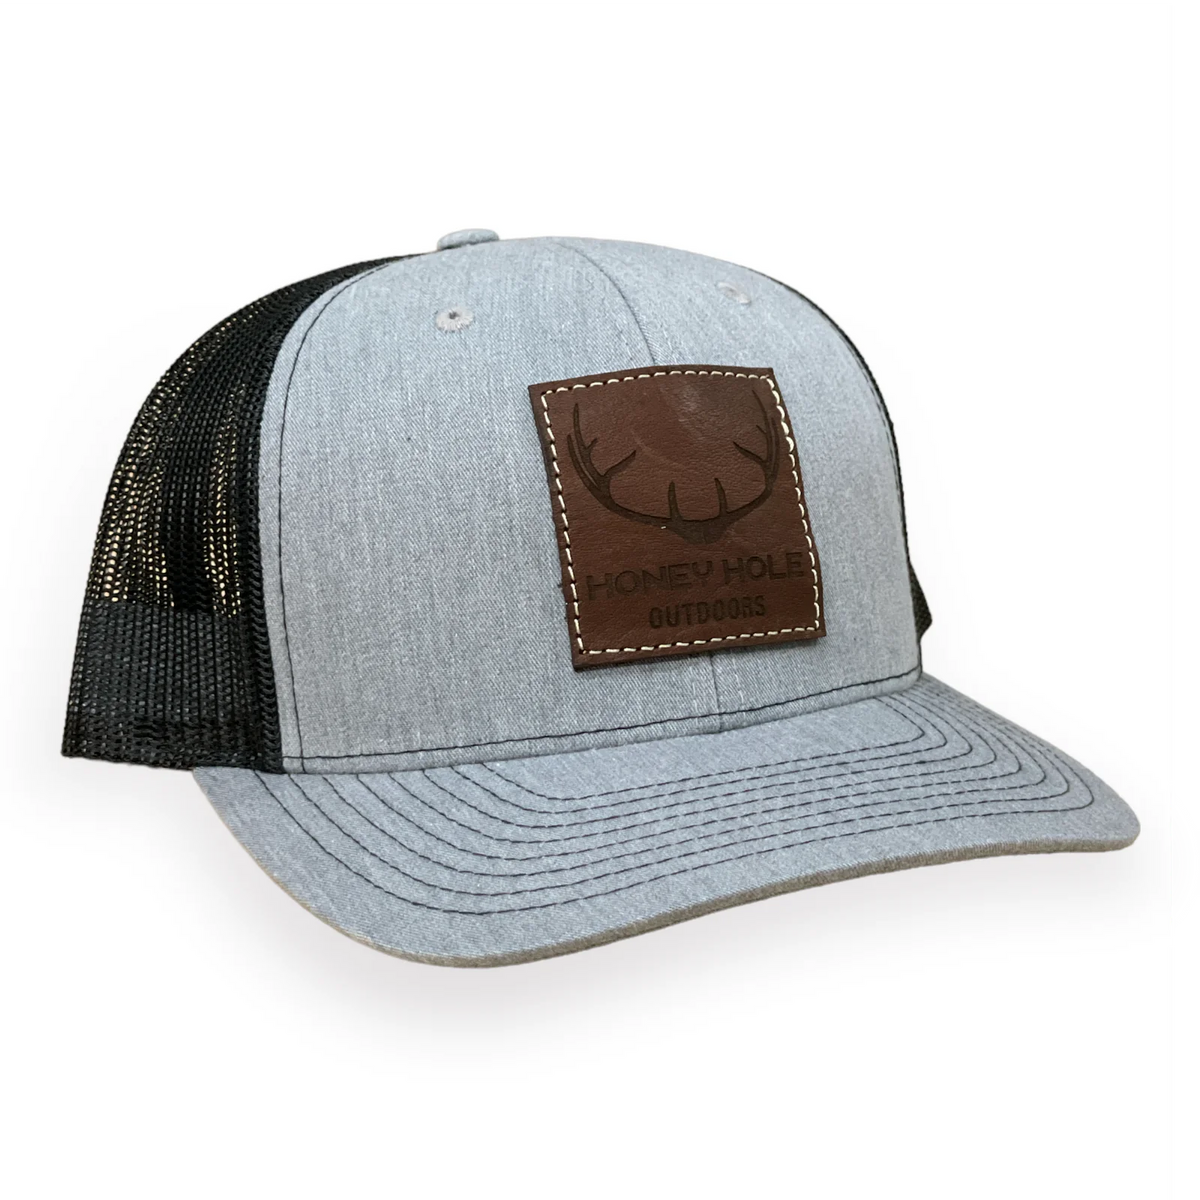 Honey Hole Leather Buck Hat